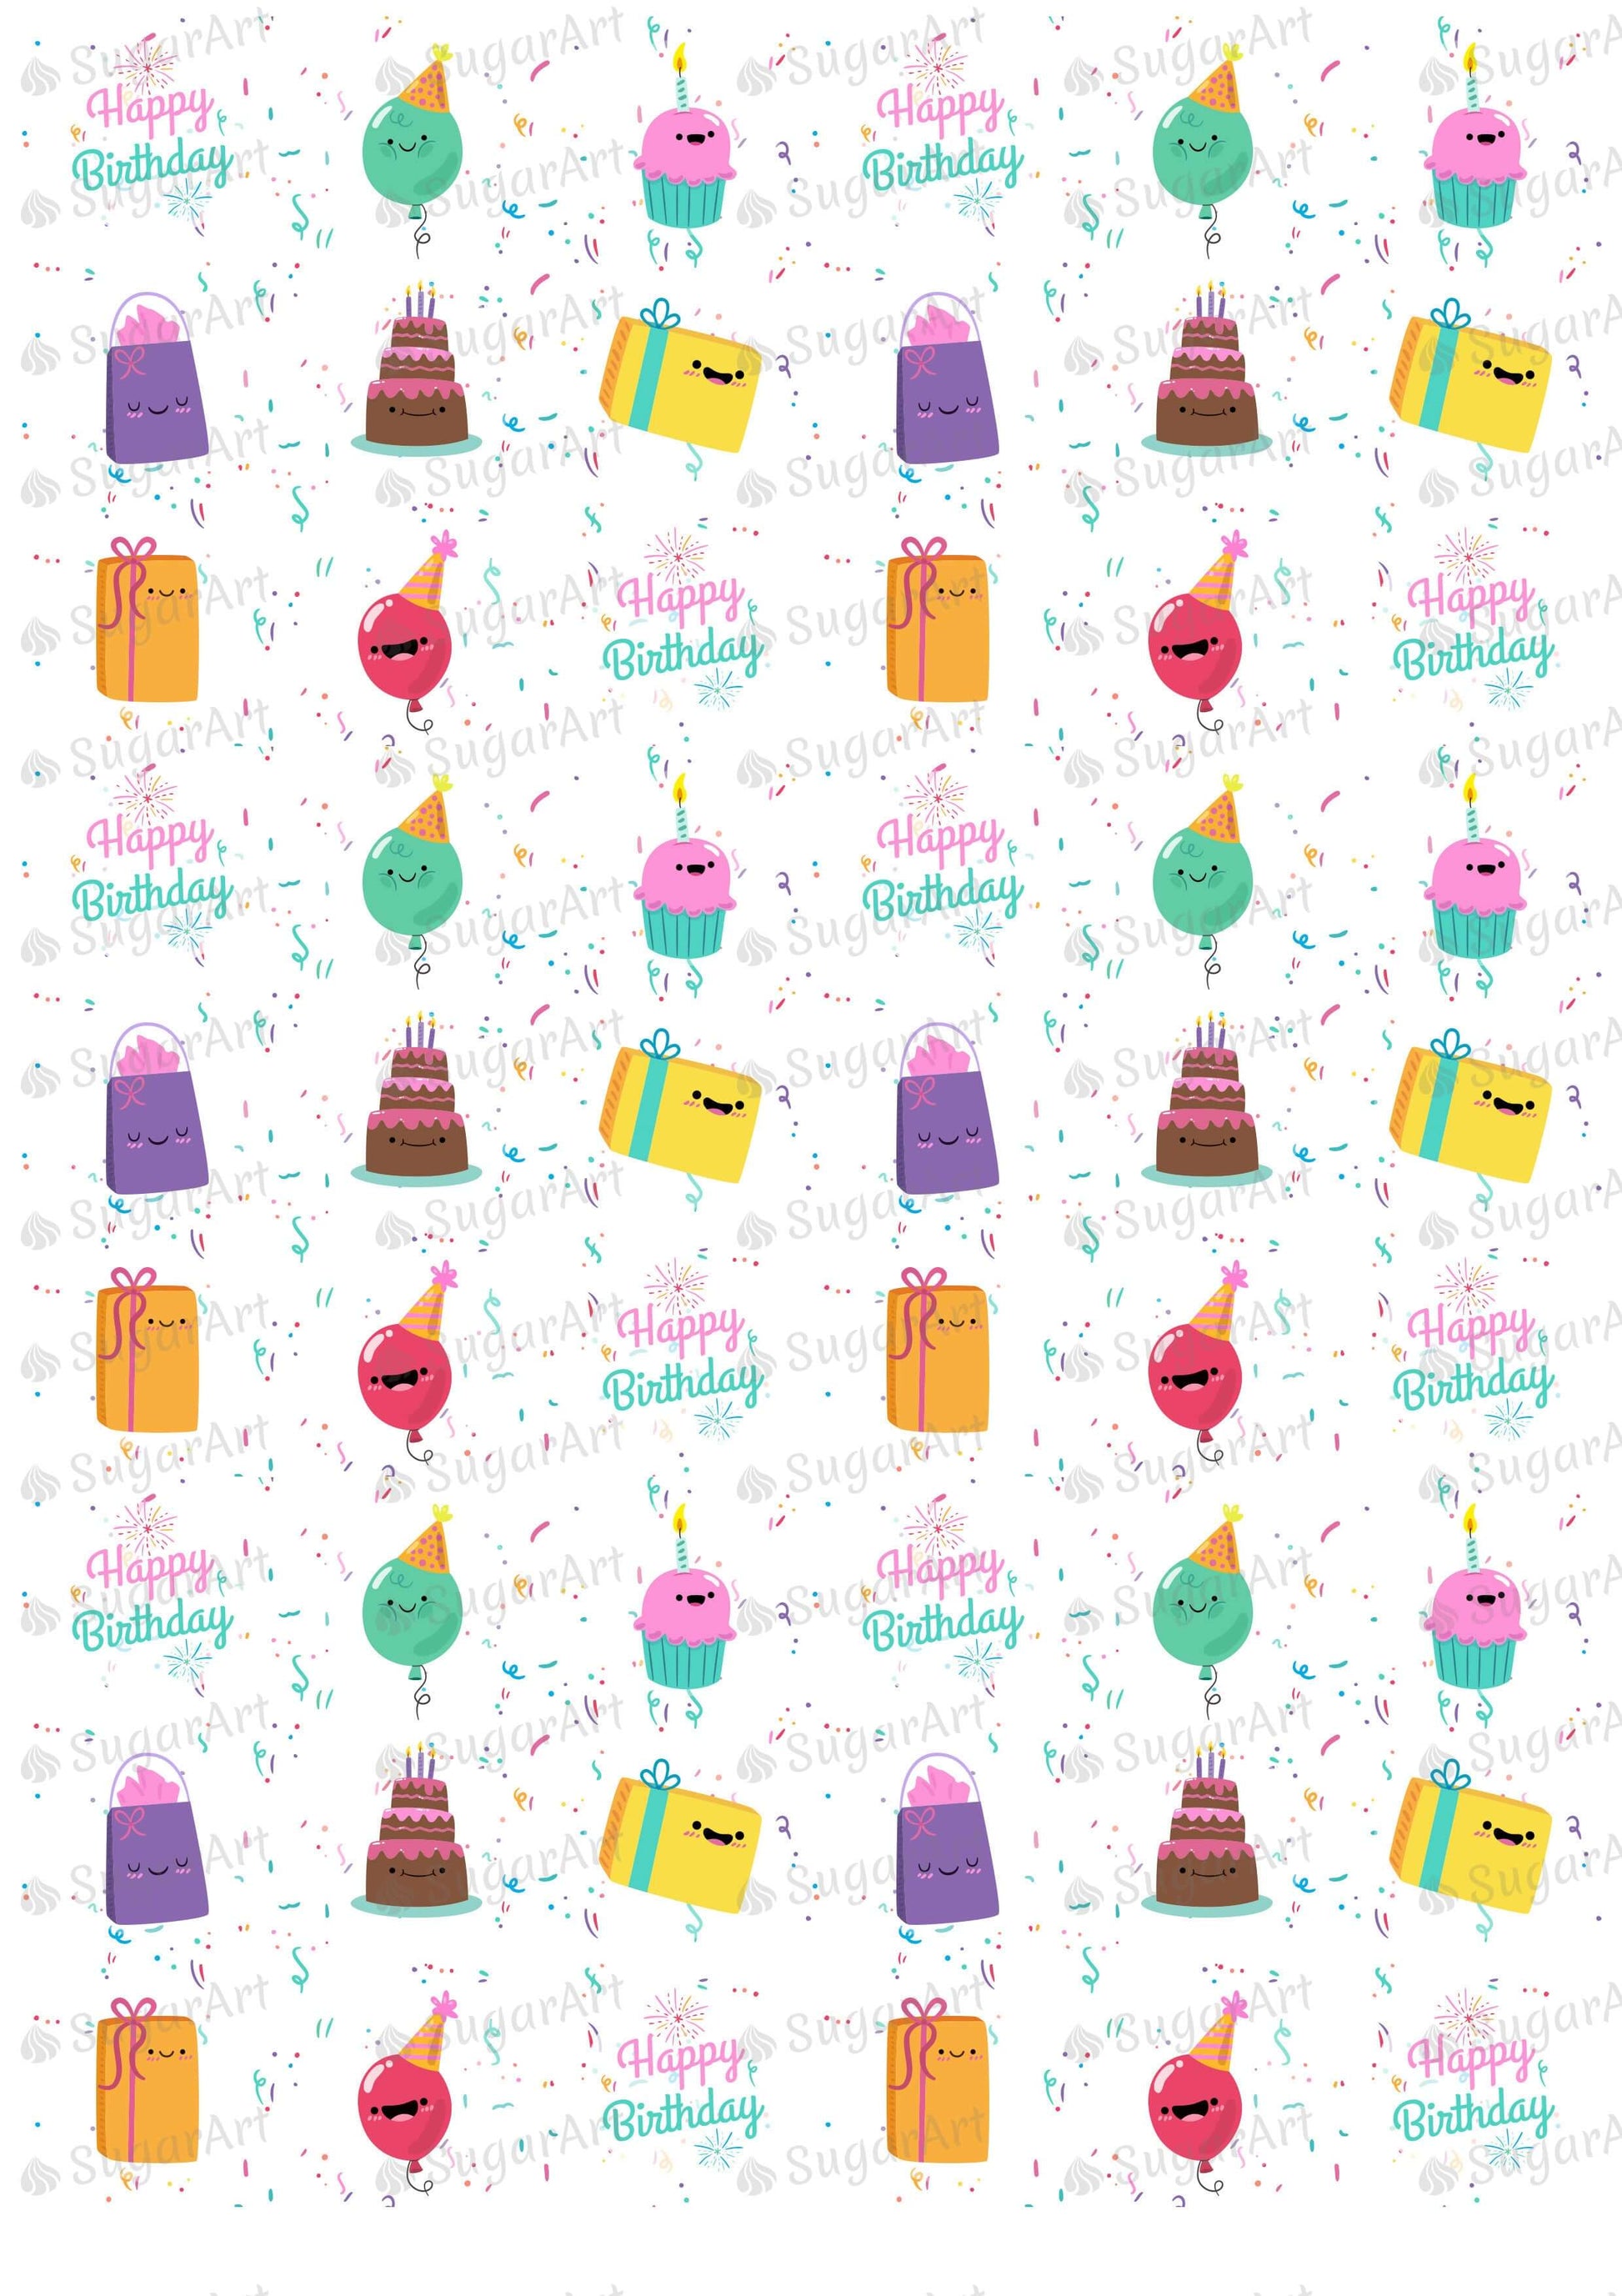 Happy Birthday! Colorful Smiling Birthday Items - HSA029-Sugar Stamp sheets-Sugar Art